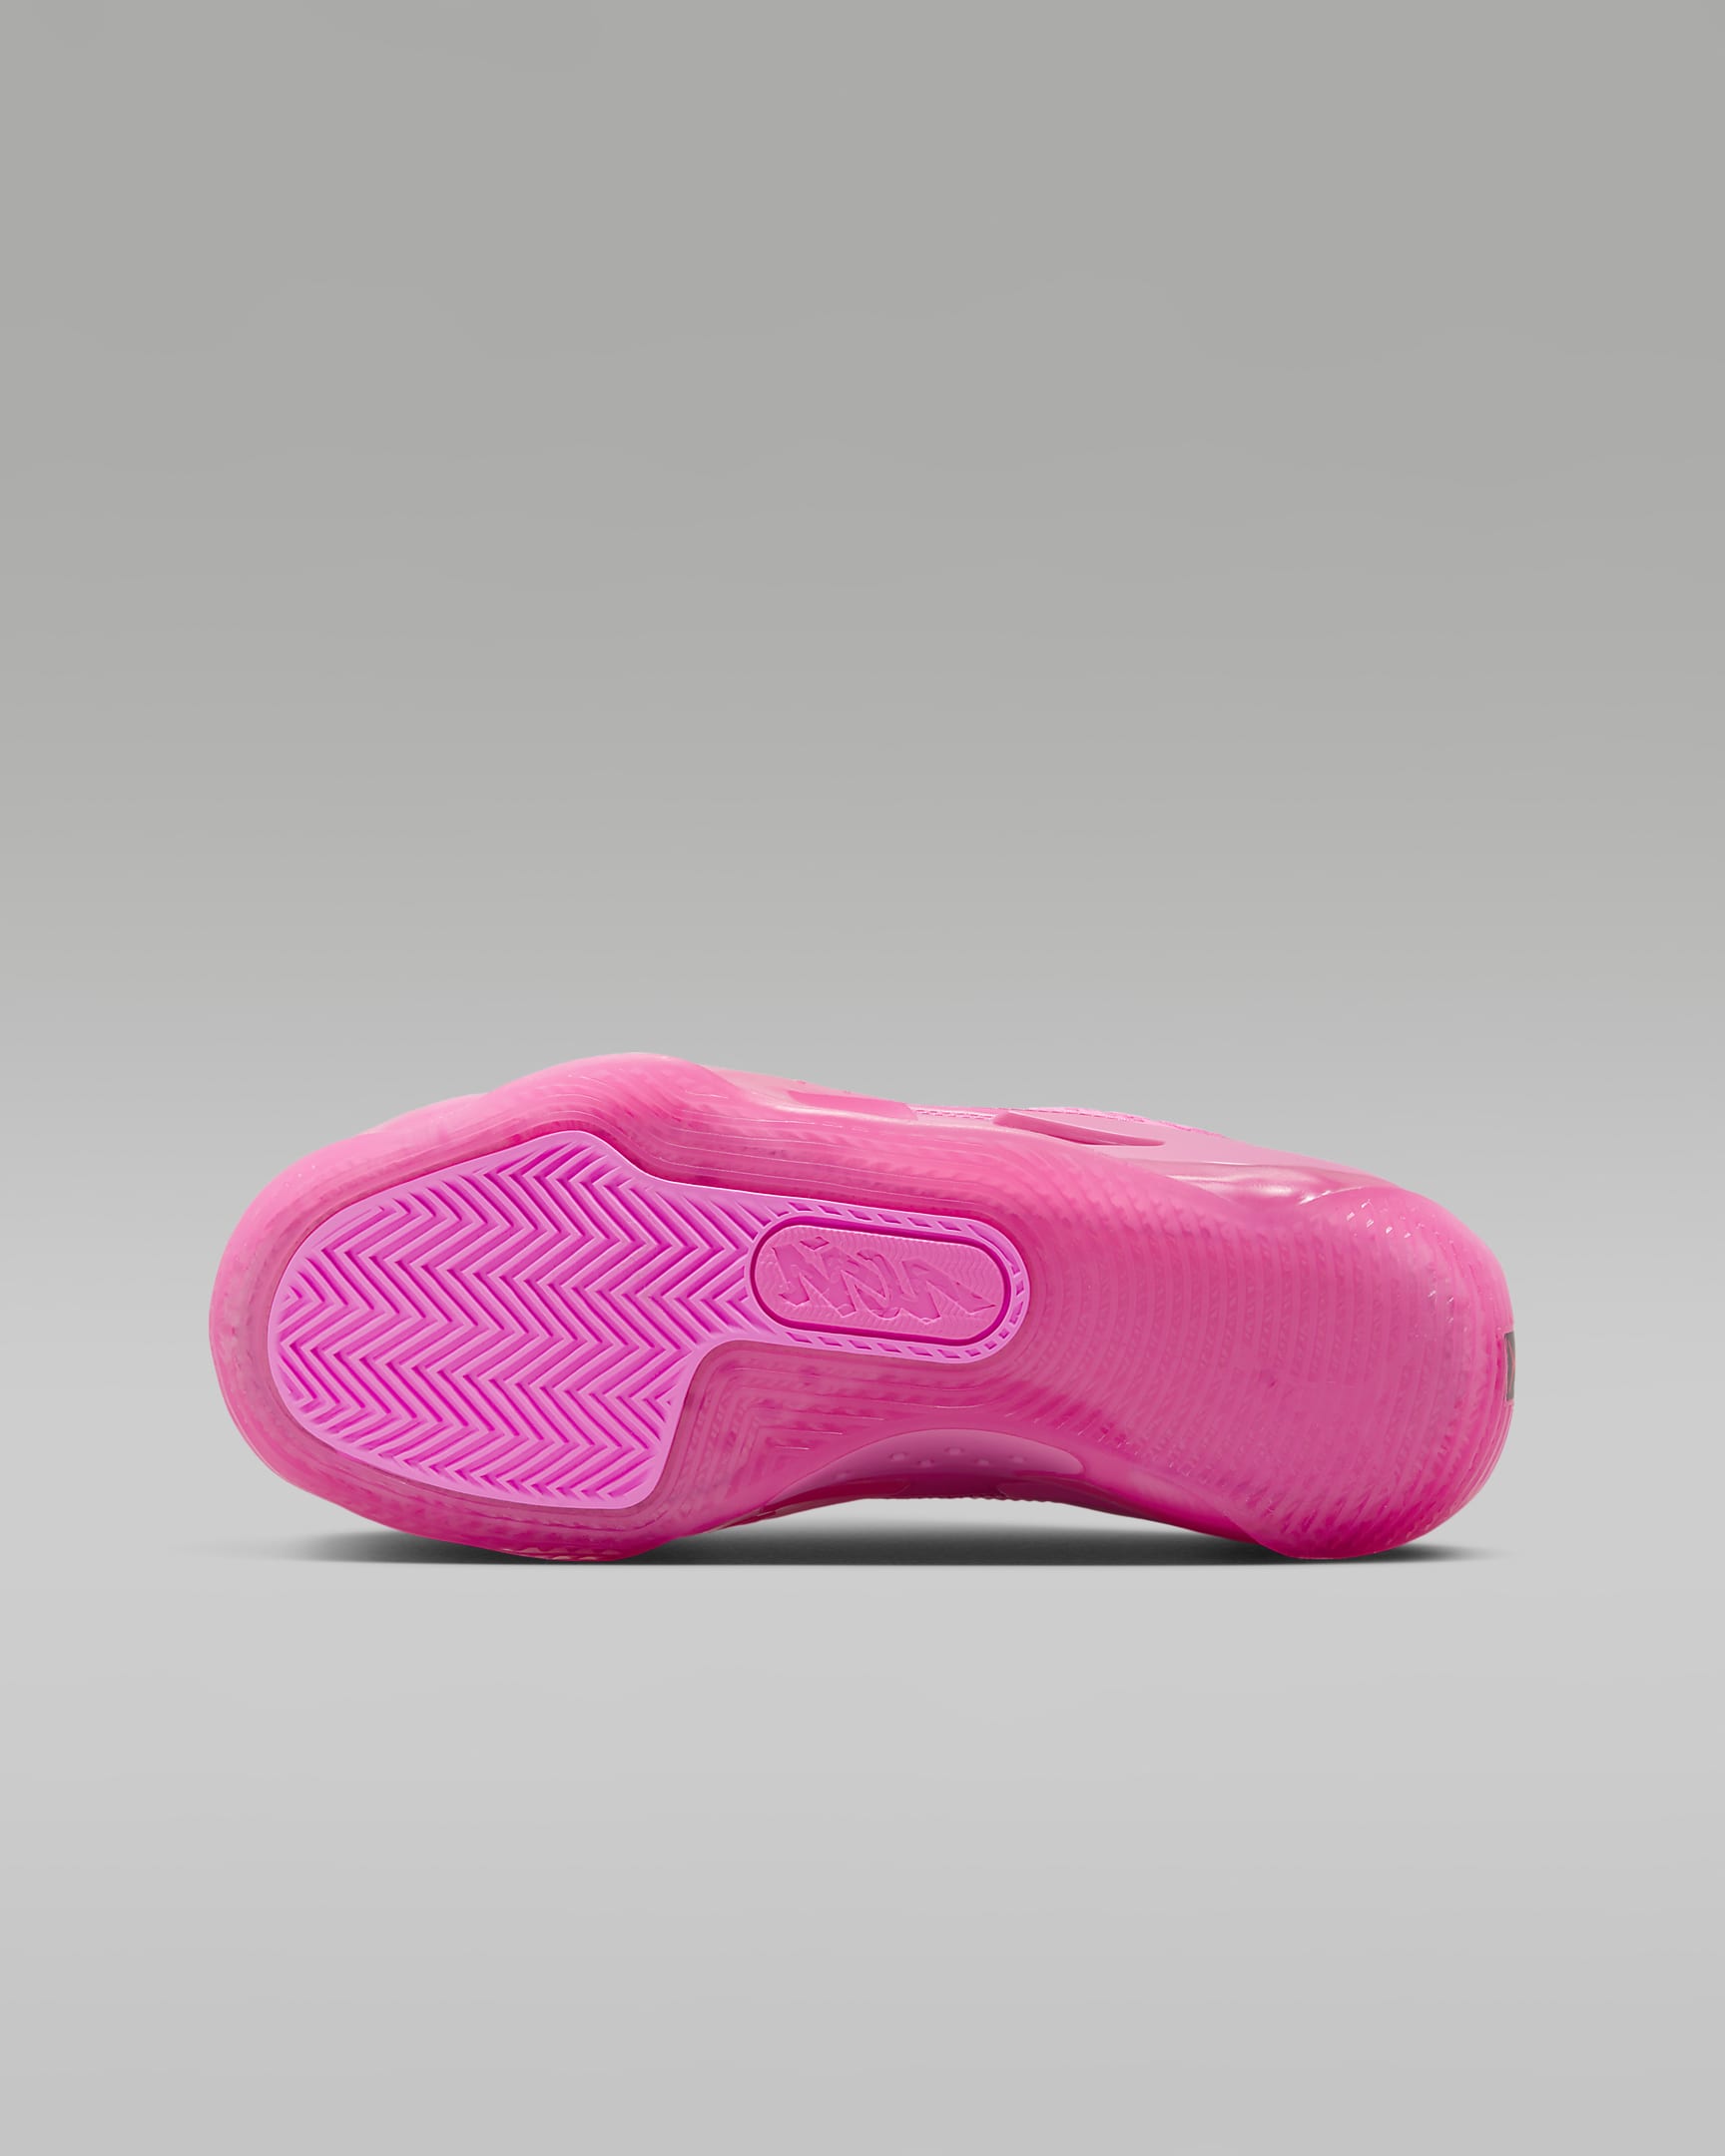 Zion 3 Zapatillas de baloncesto - Niño/a - Pinksicle/Pink Glow/Pink Spell